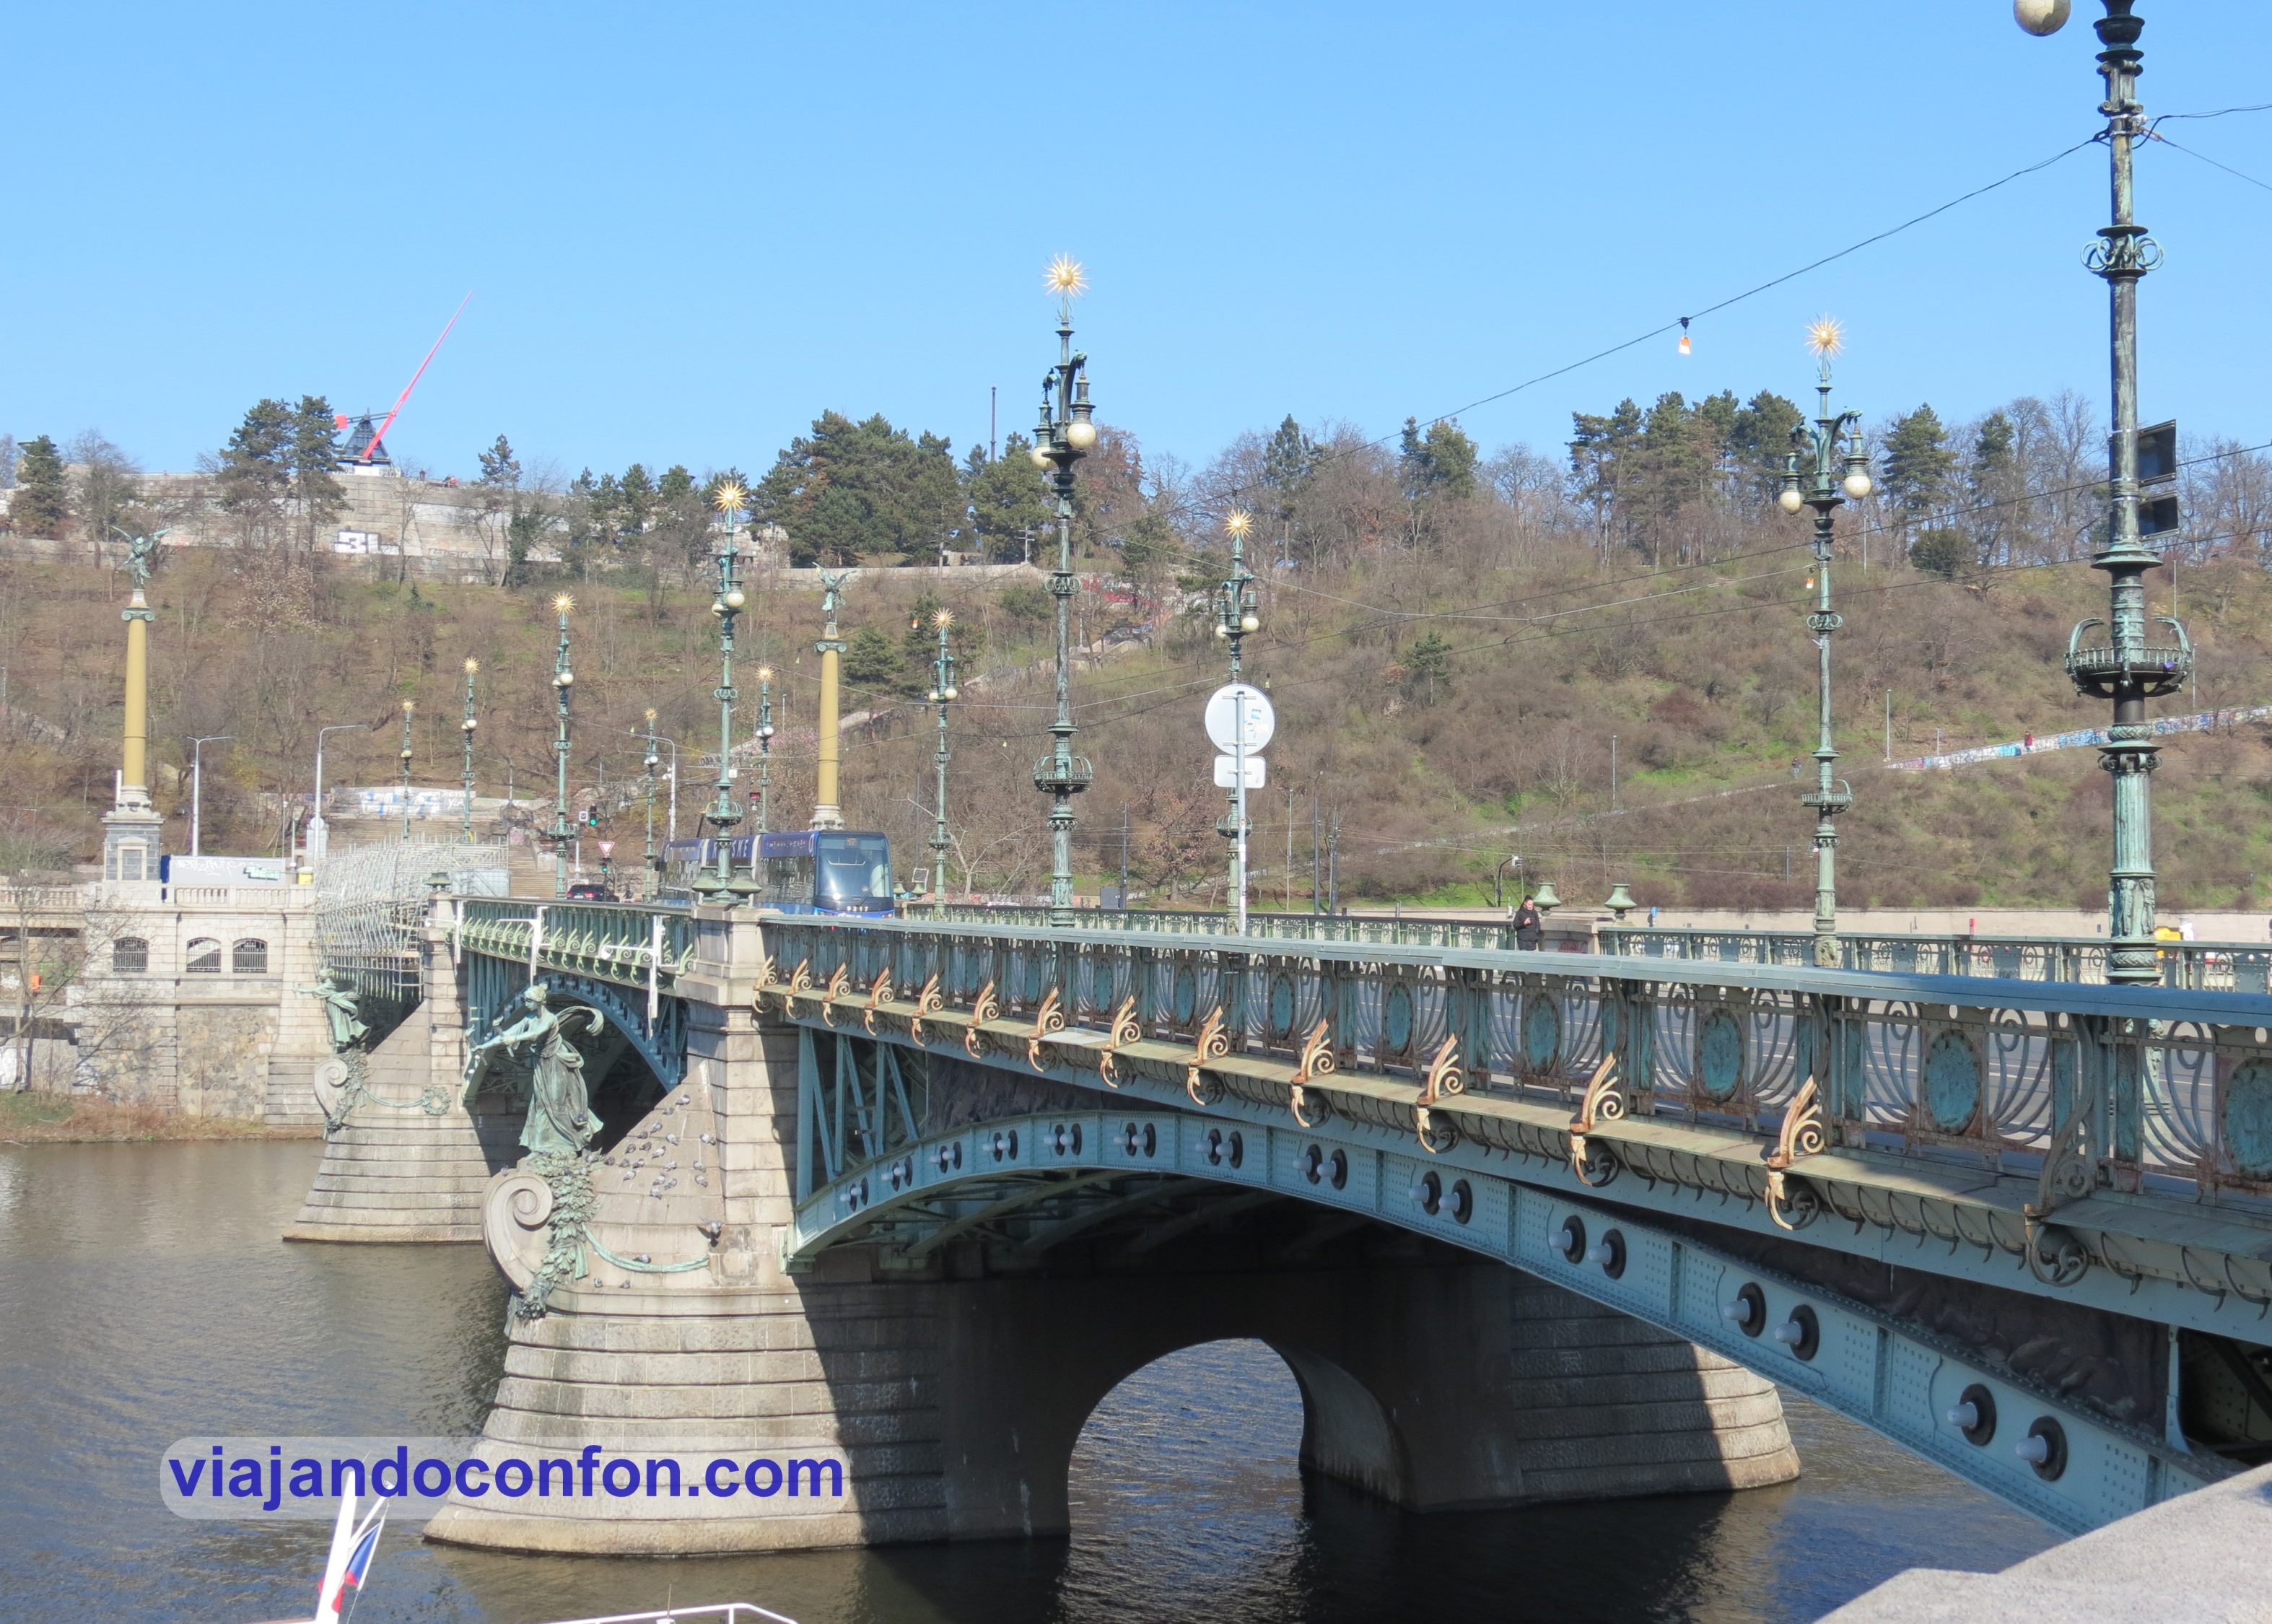 Čechův most, el Puente Čech
PRaga / Prague